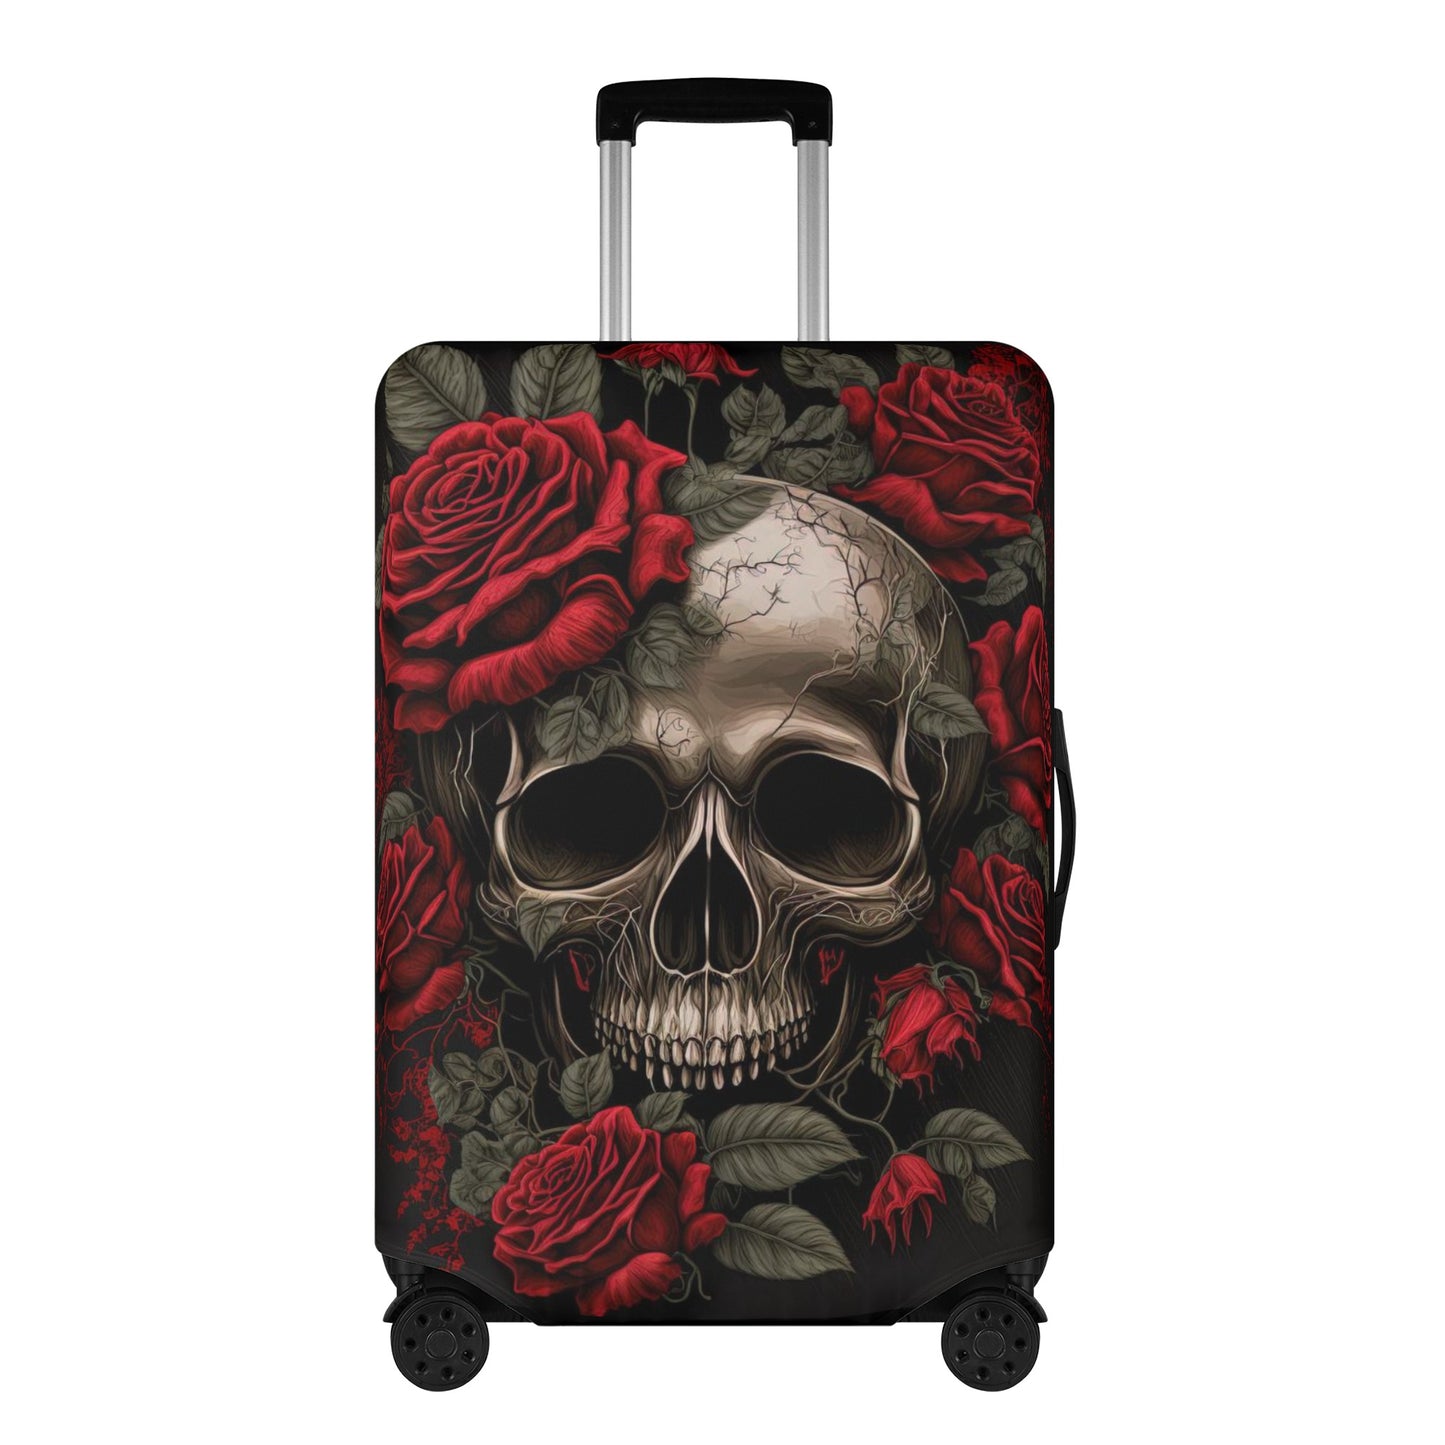 Flower skull luggage cover, skeleton suitcase tag, christmas skull suitcase protector, punisher skull luggage tag, halloween suitcase cover,